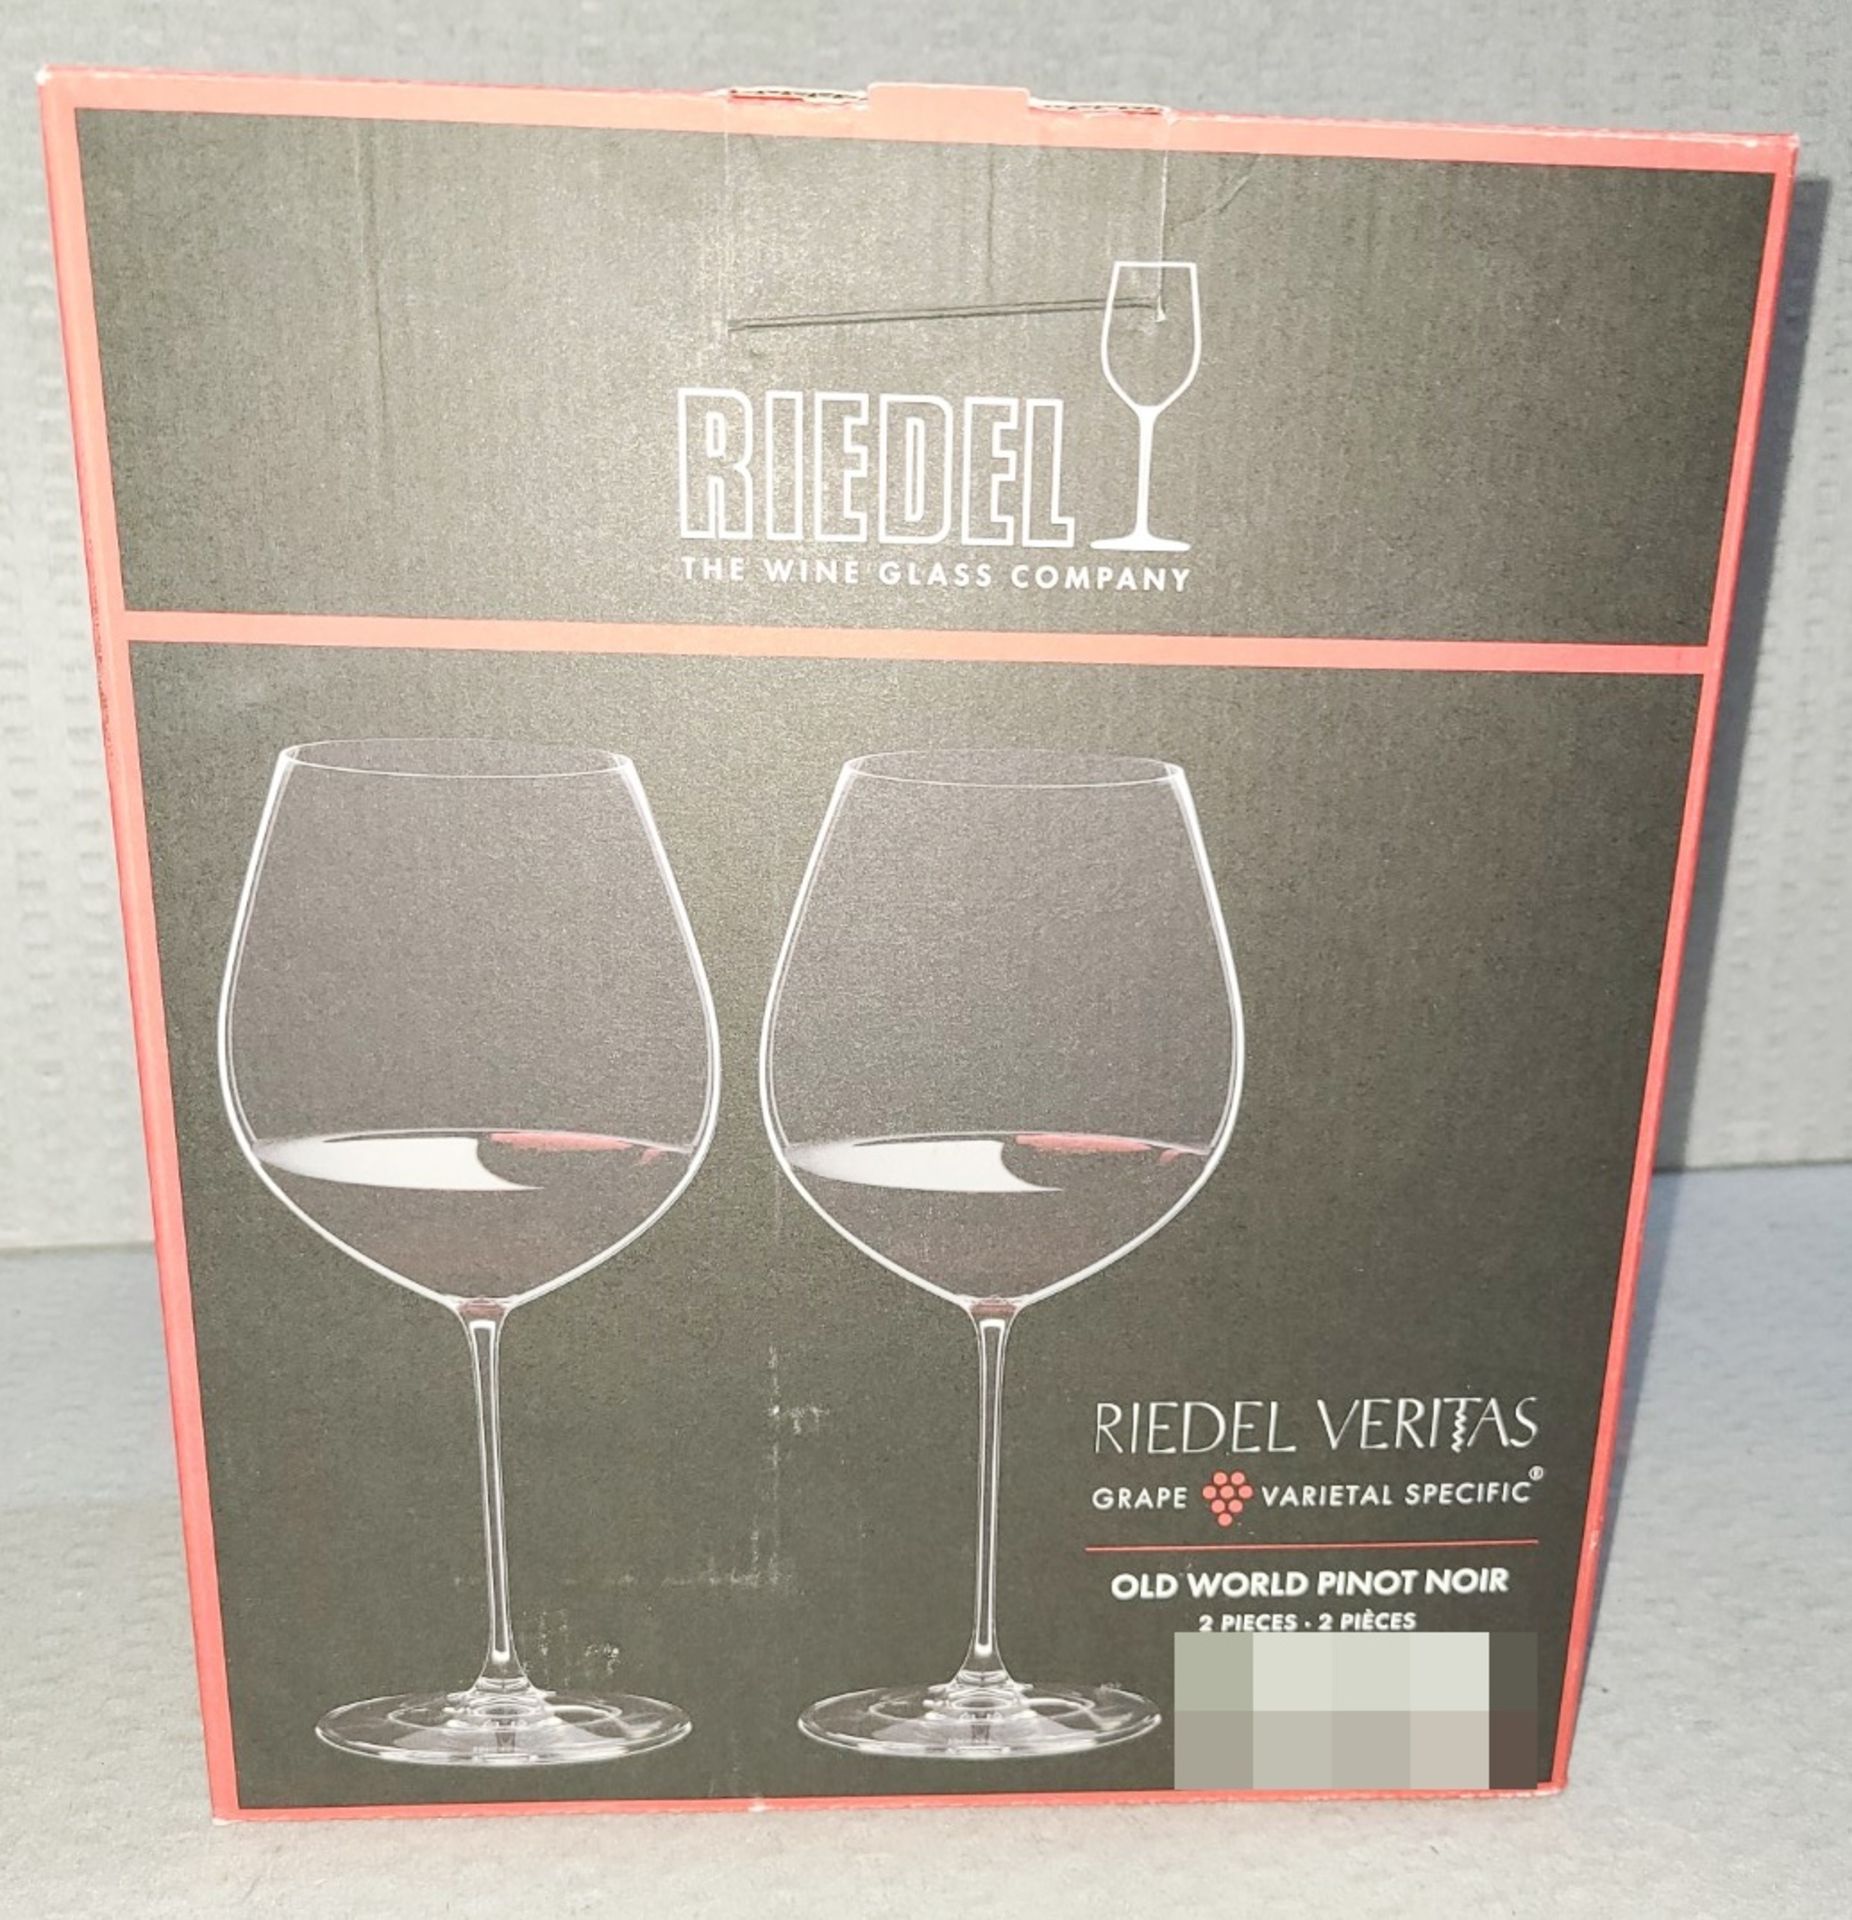 1 x Riedel 'Veritas Old World' Pinot Noir Wine Glass - Original Price £62.00 - Image 4 of 4